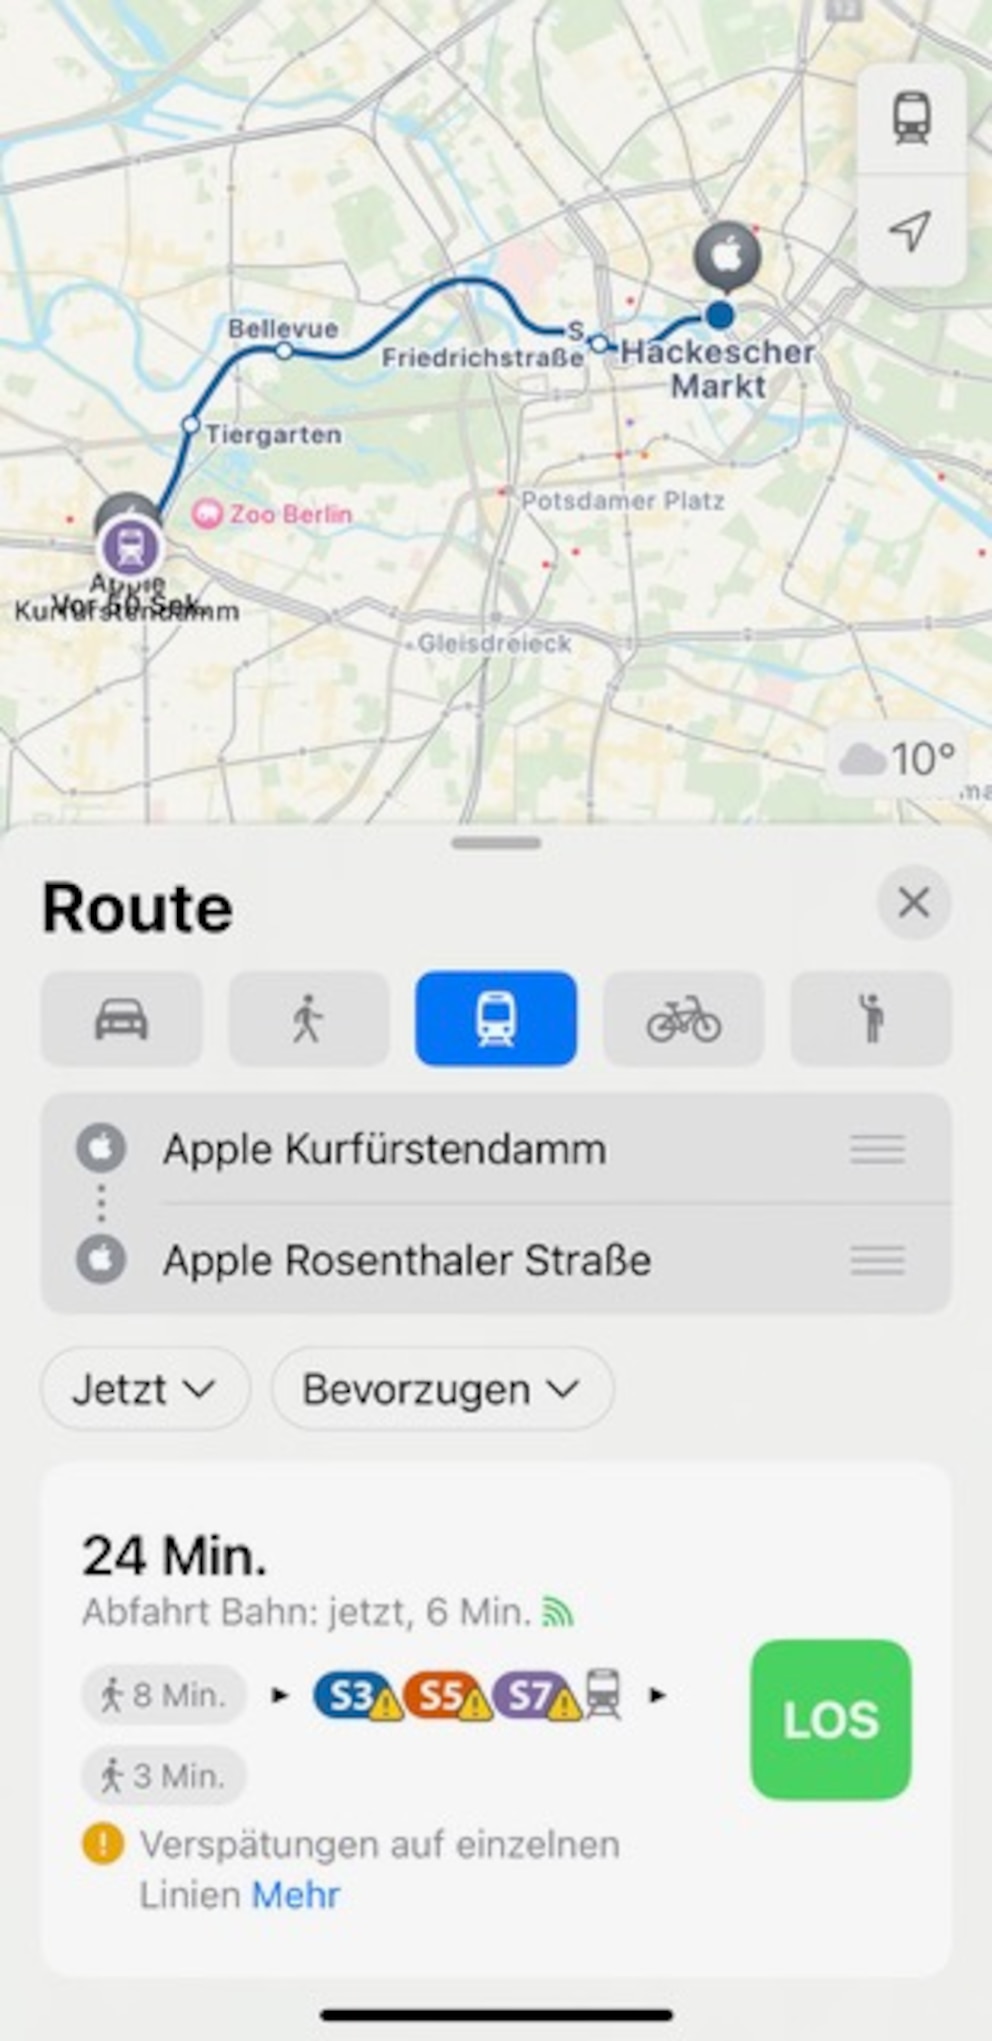 Ausschnitt aus Apple Maps für Berlin.